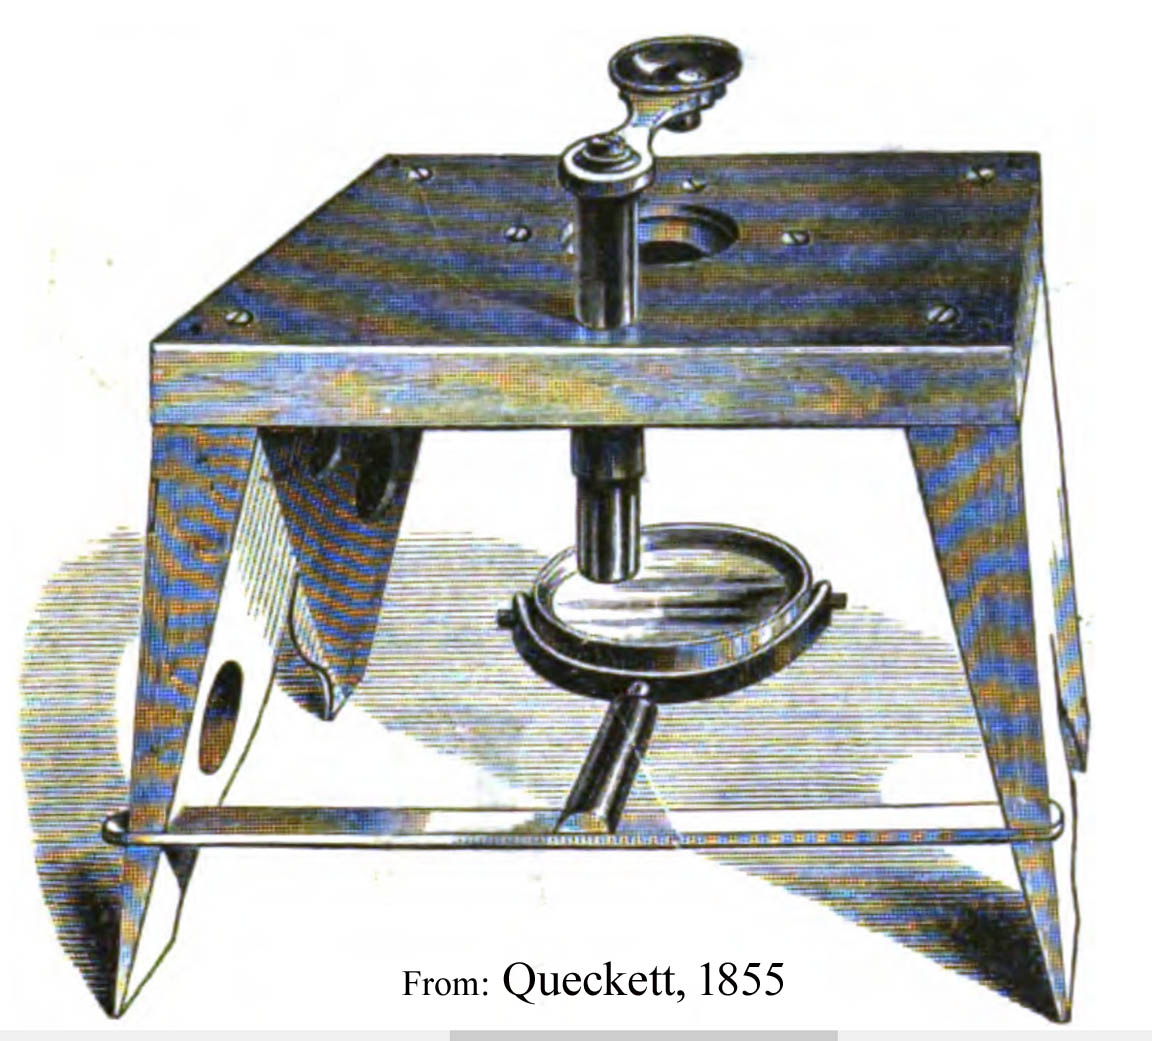 Queckett Microscope Engraving